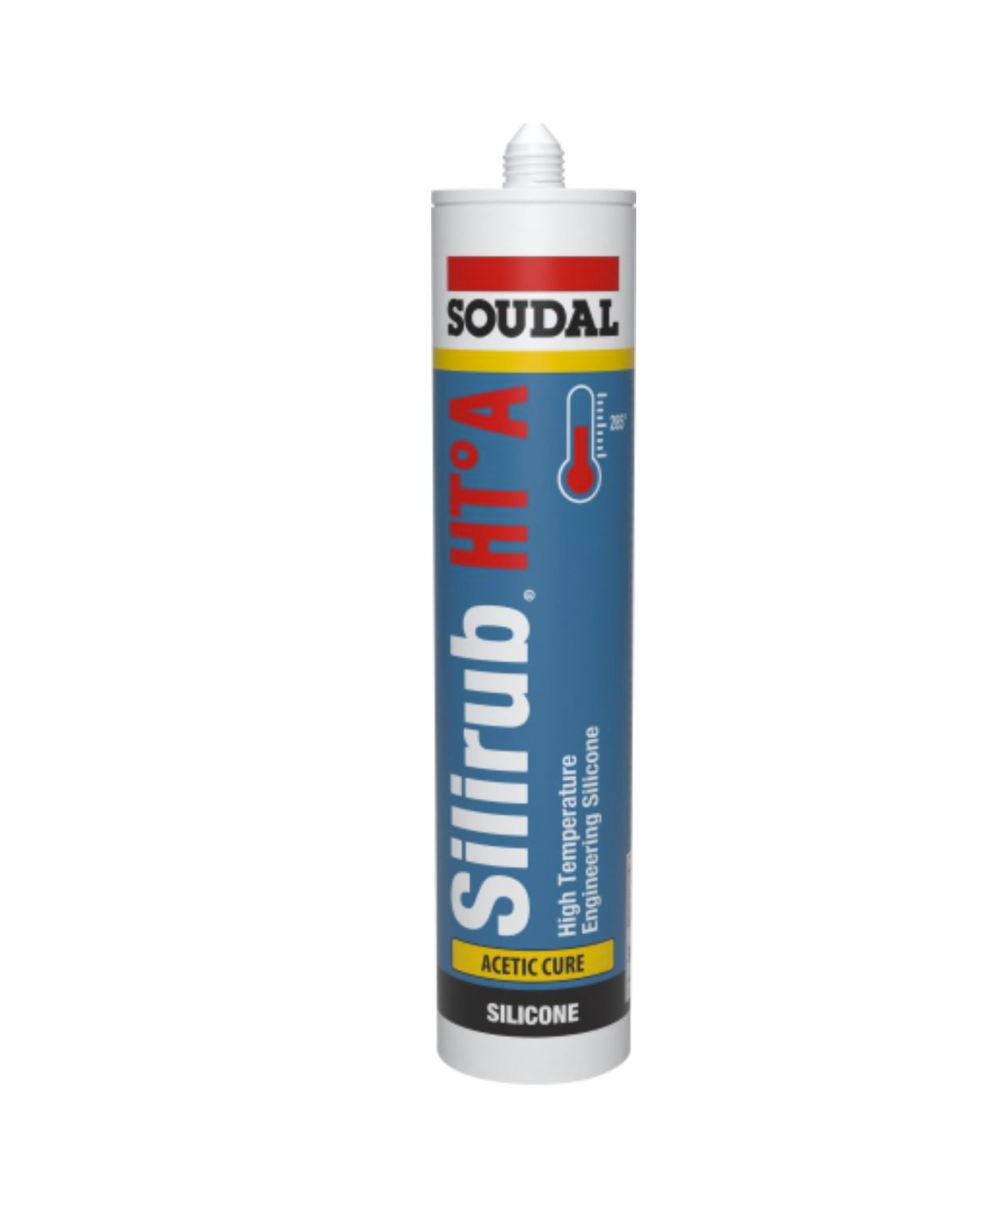 Soudal fire retardant Silirub HT-A Acetic Cure - Black (Up to 285°C) 310ml - Premium  from Soudal - Shop now at Firebox Australia